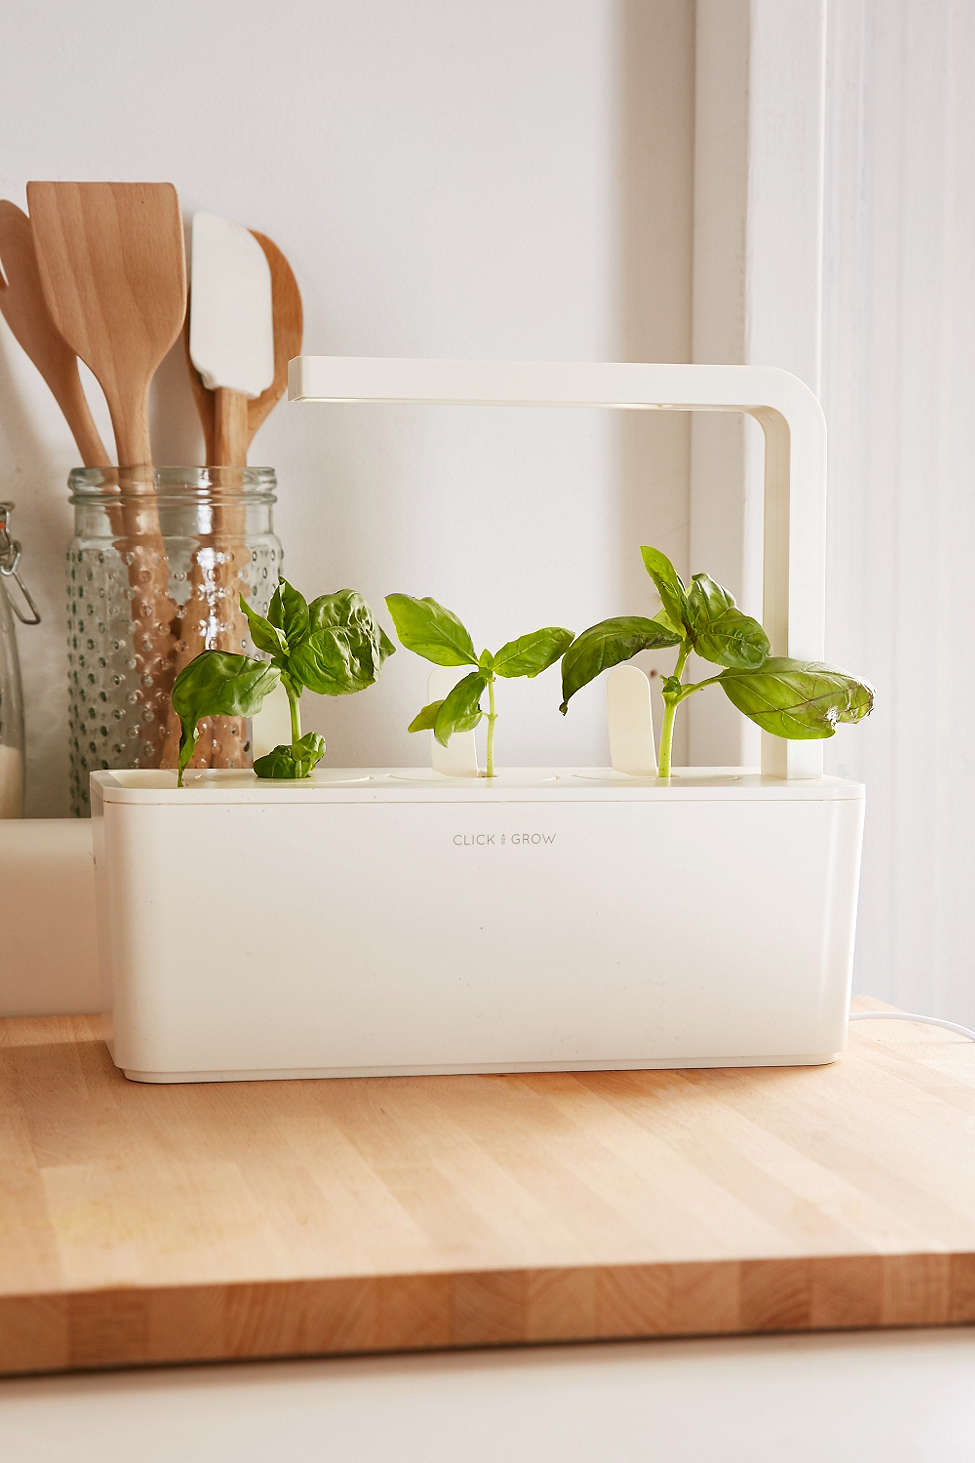 Click & Grow Smart Herb Garden Starter Kit from Urban Outfitters